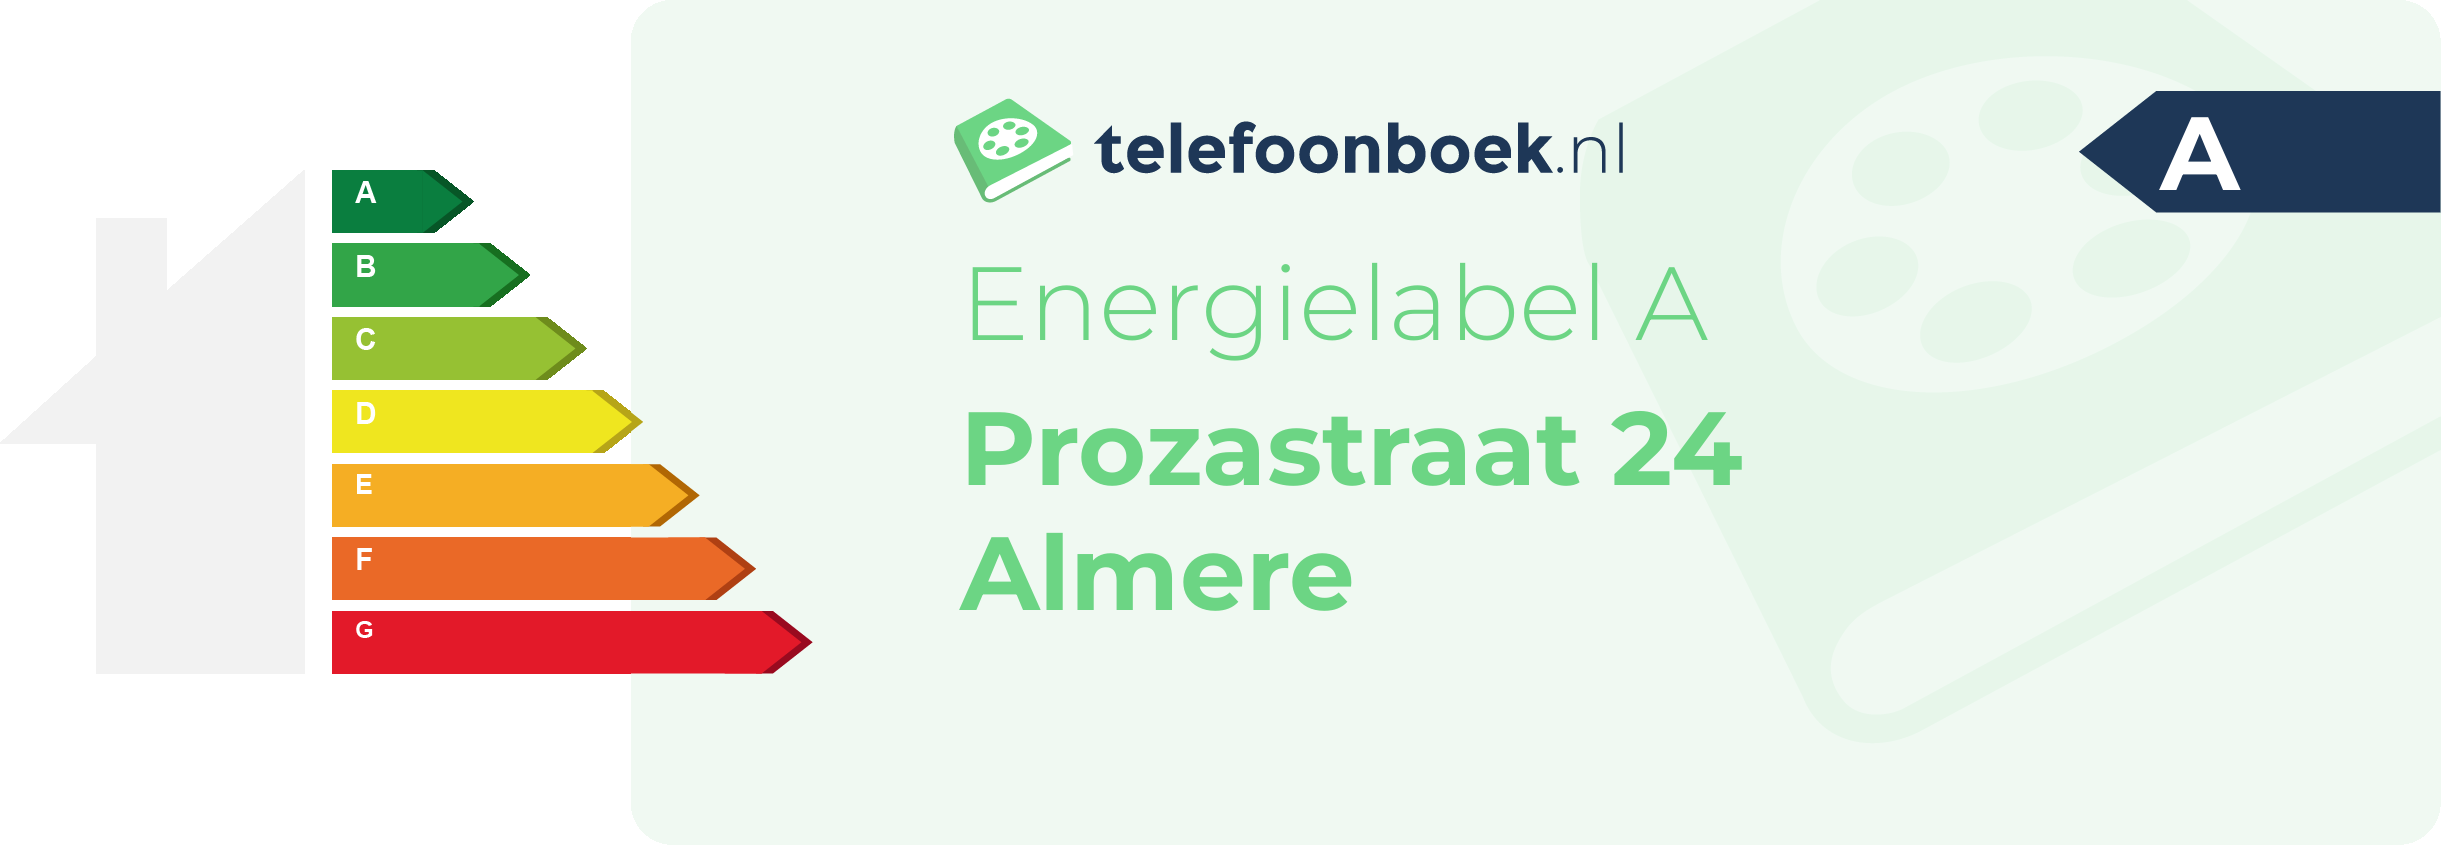 Energielabel Prozastraat 24 Almere